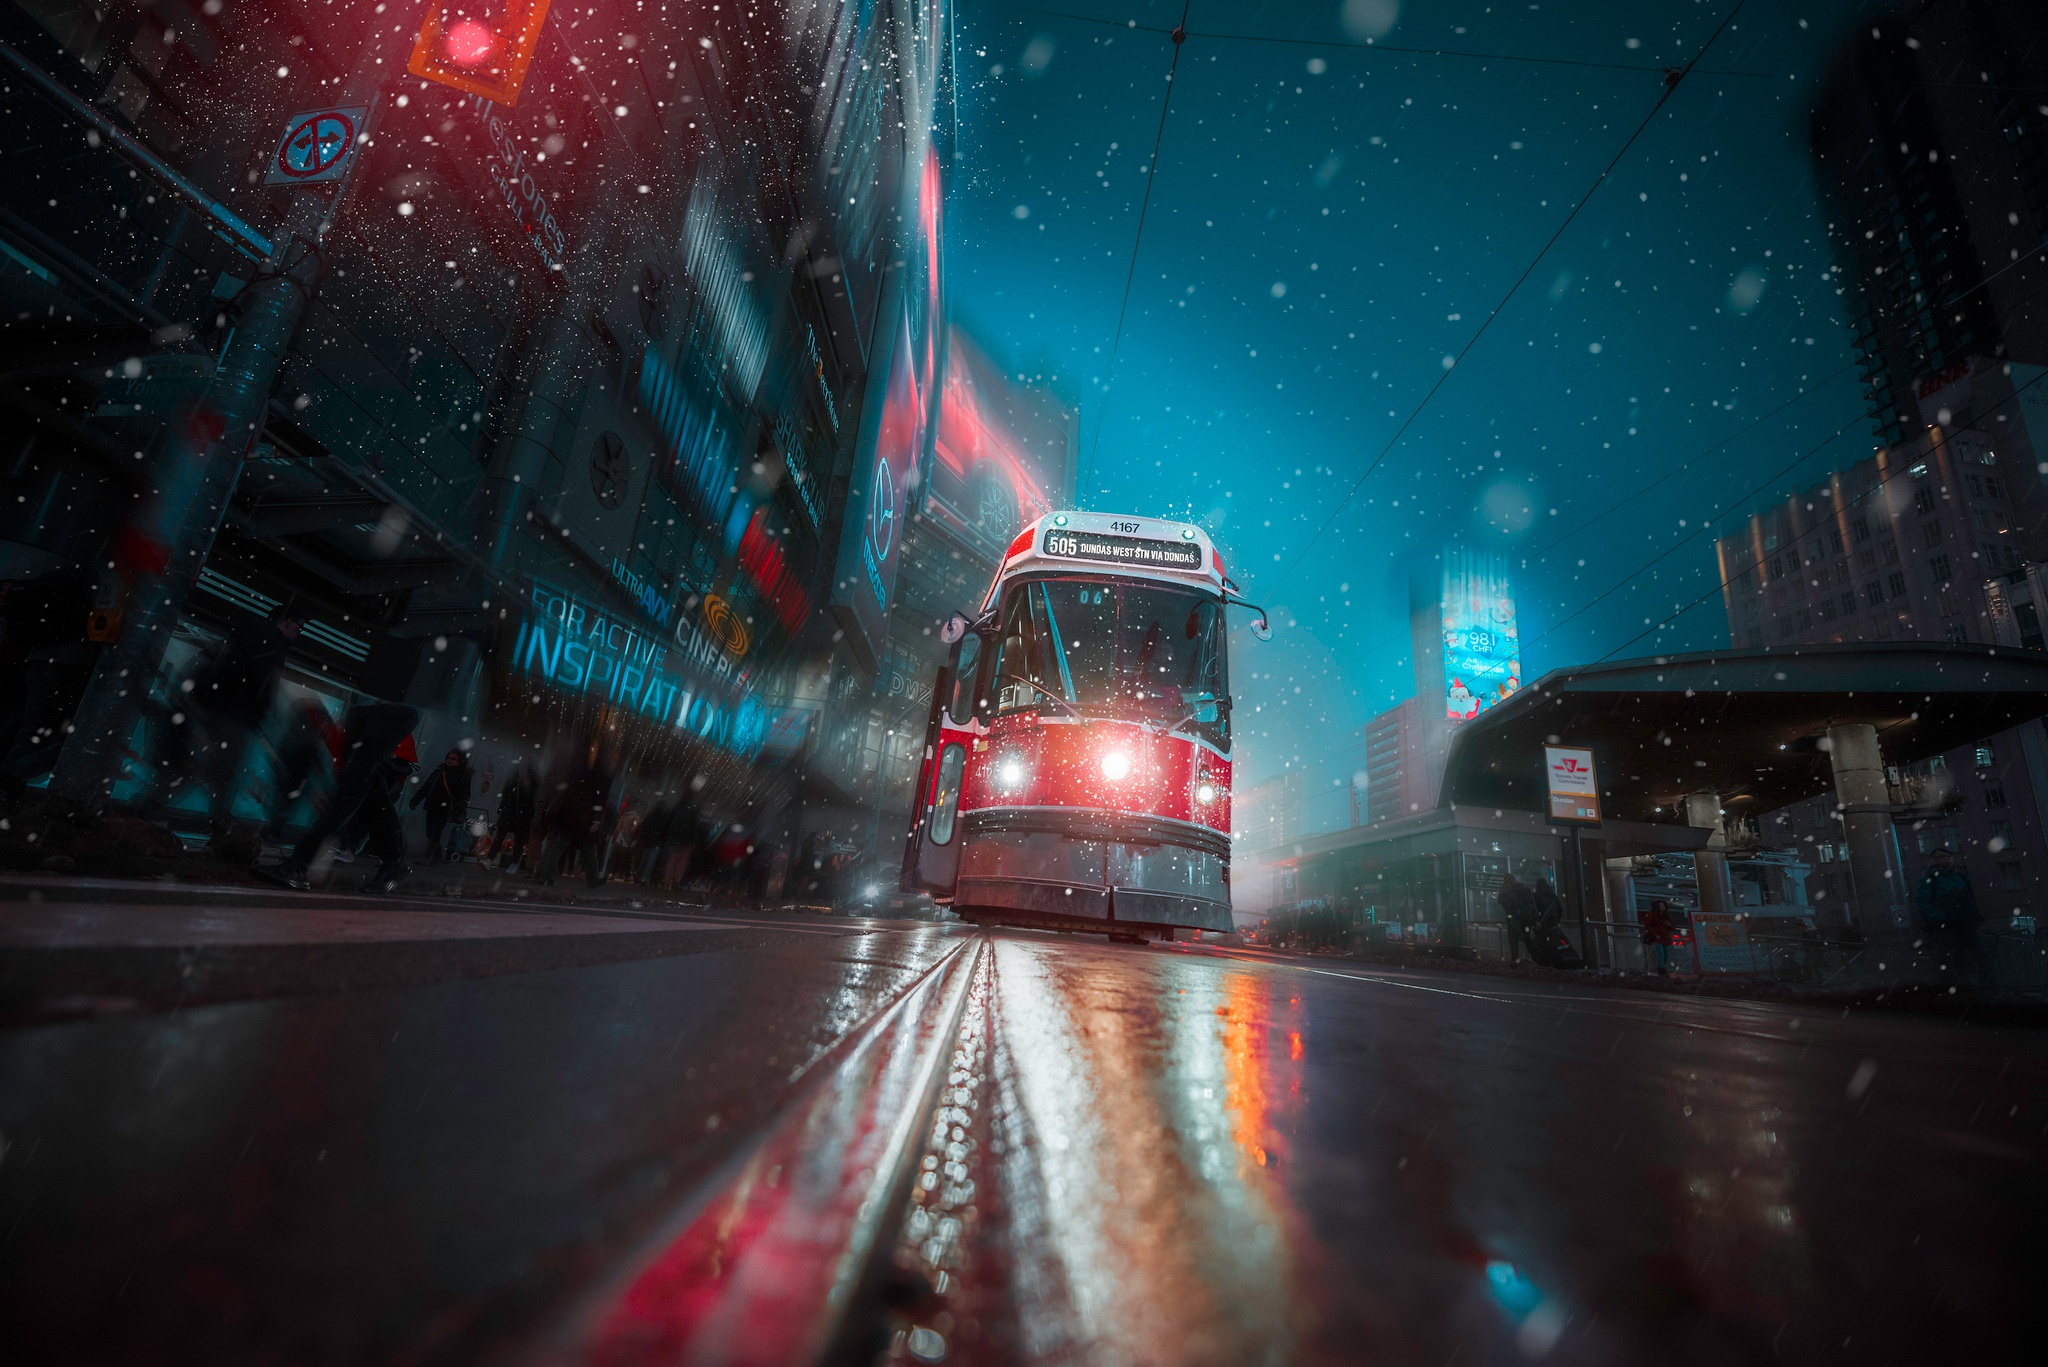 General 2048x1367 Toronto vehicle night city lights tram